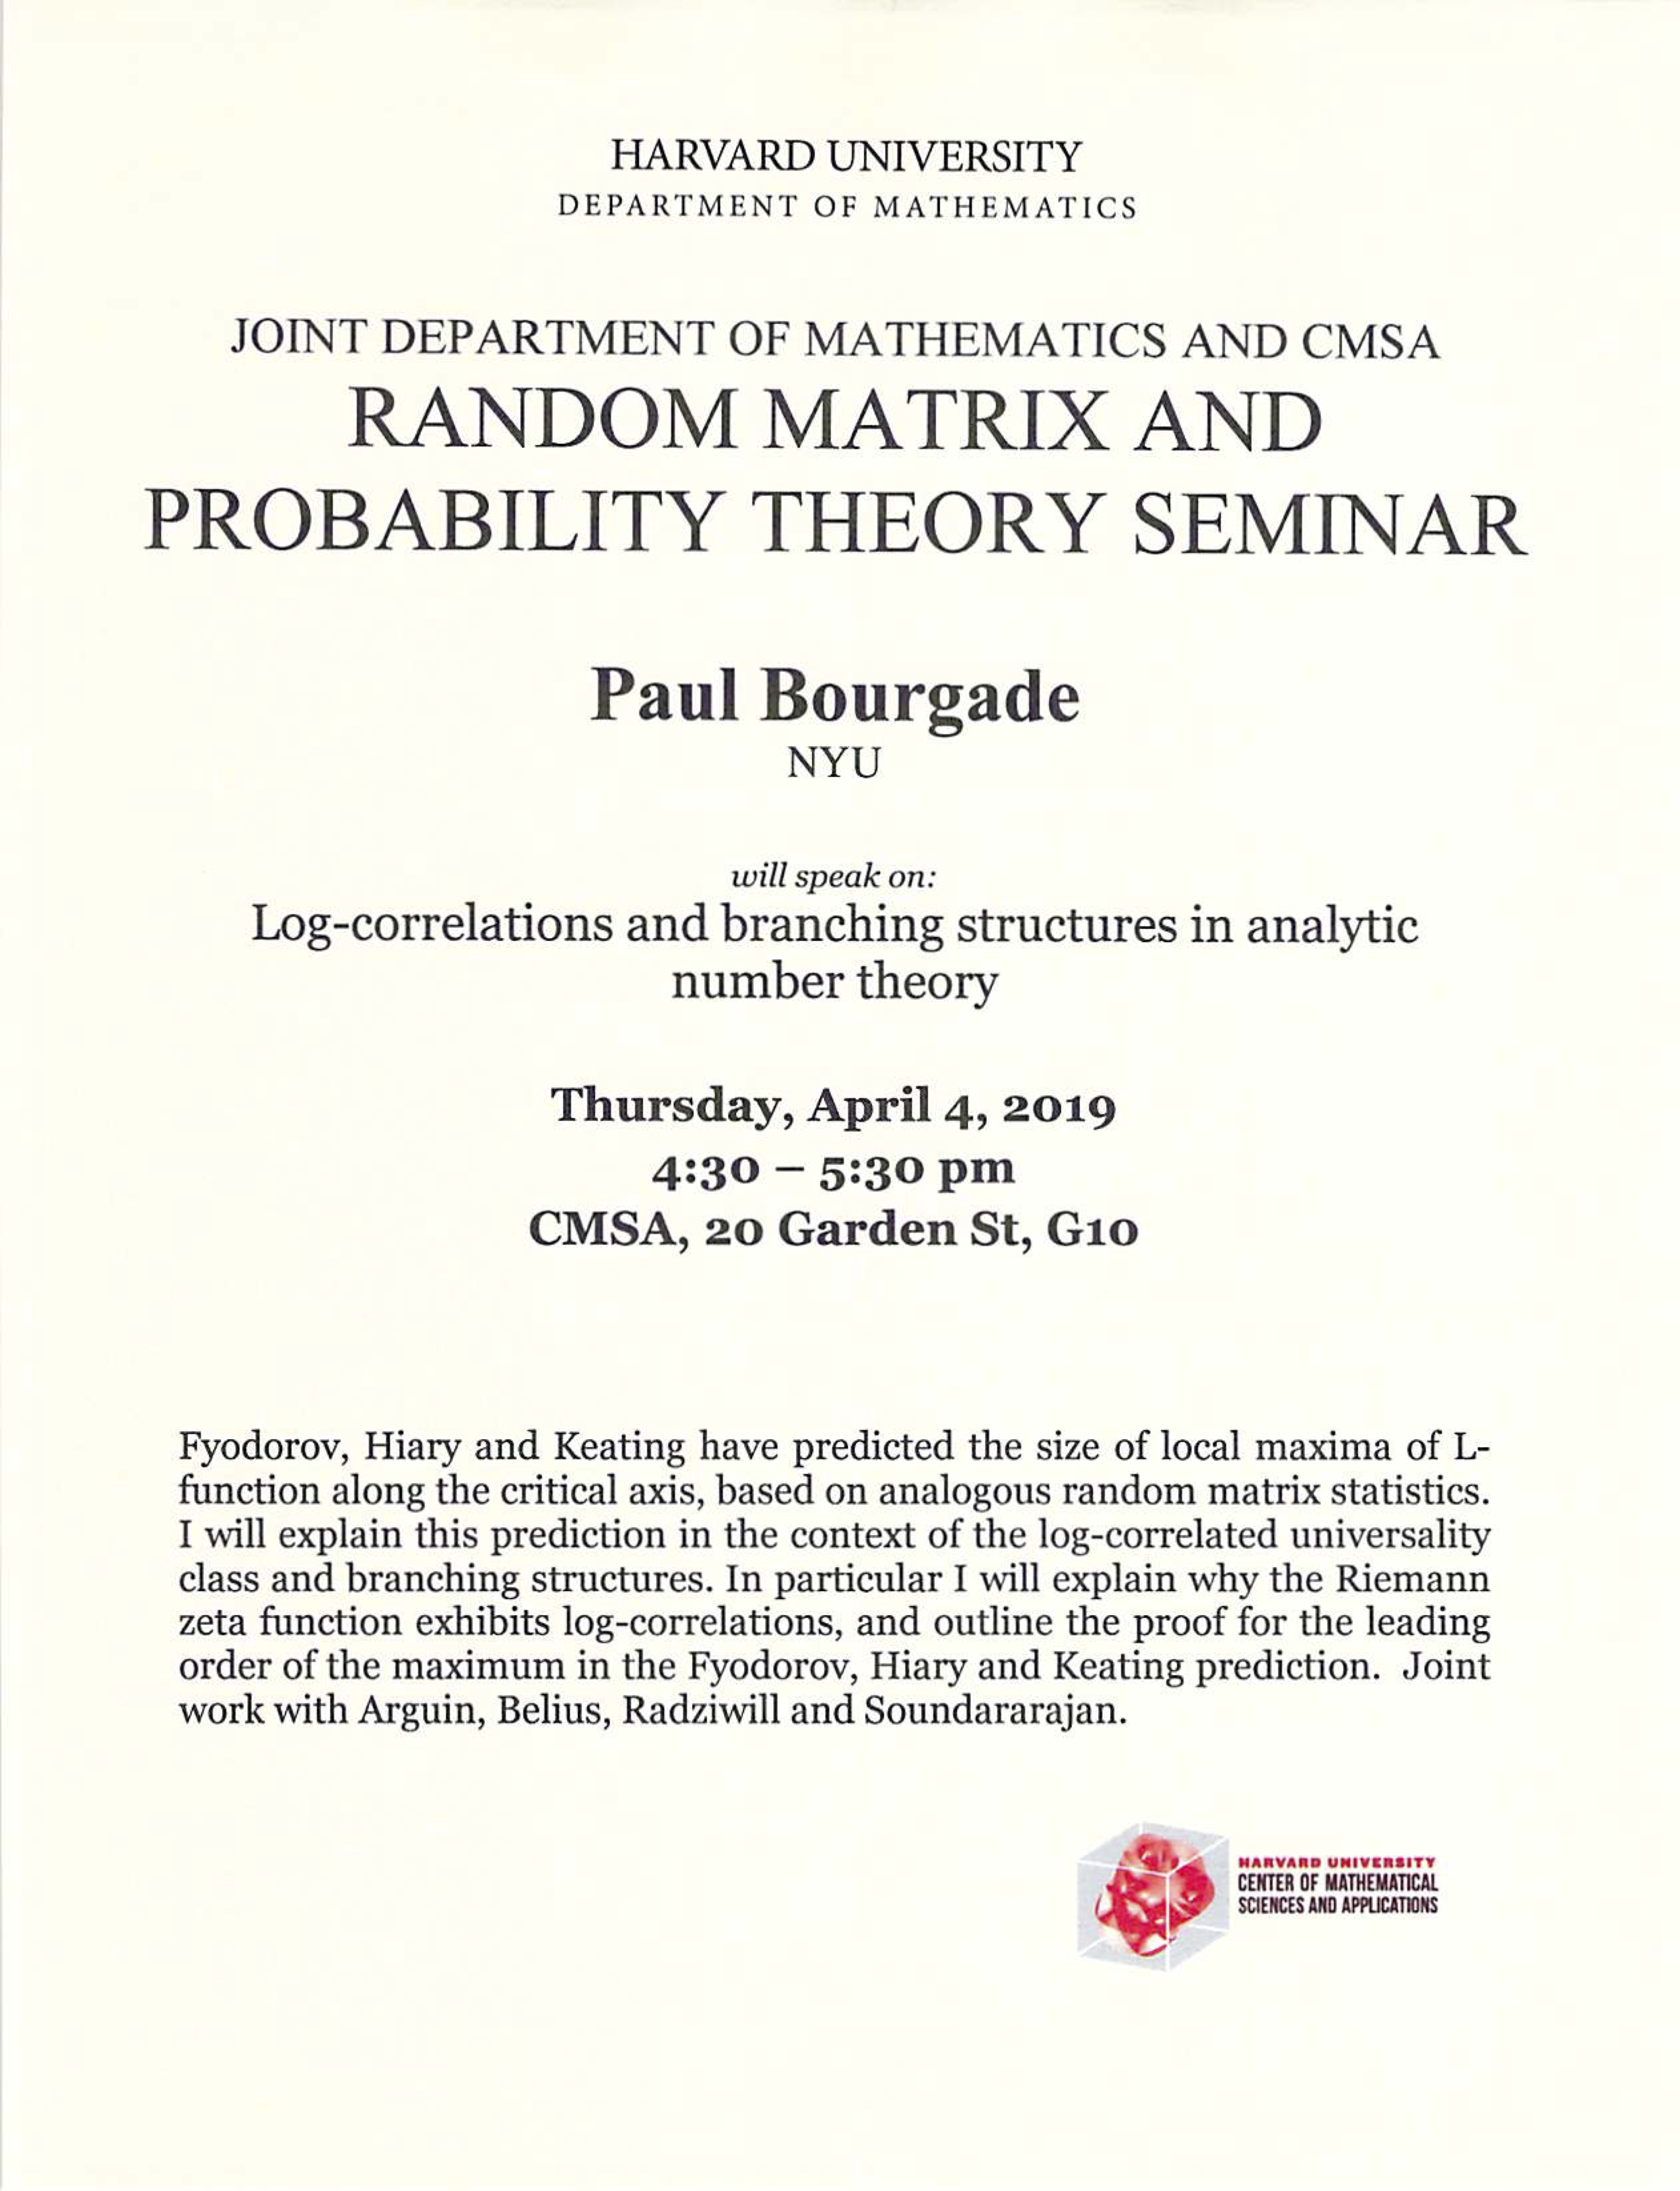 4/4/2019 Random Matrix and Probability Theory Seminar